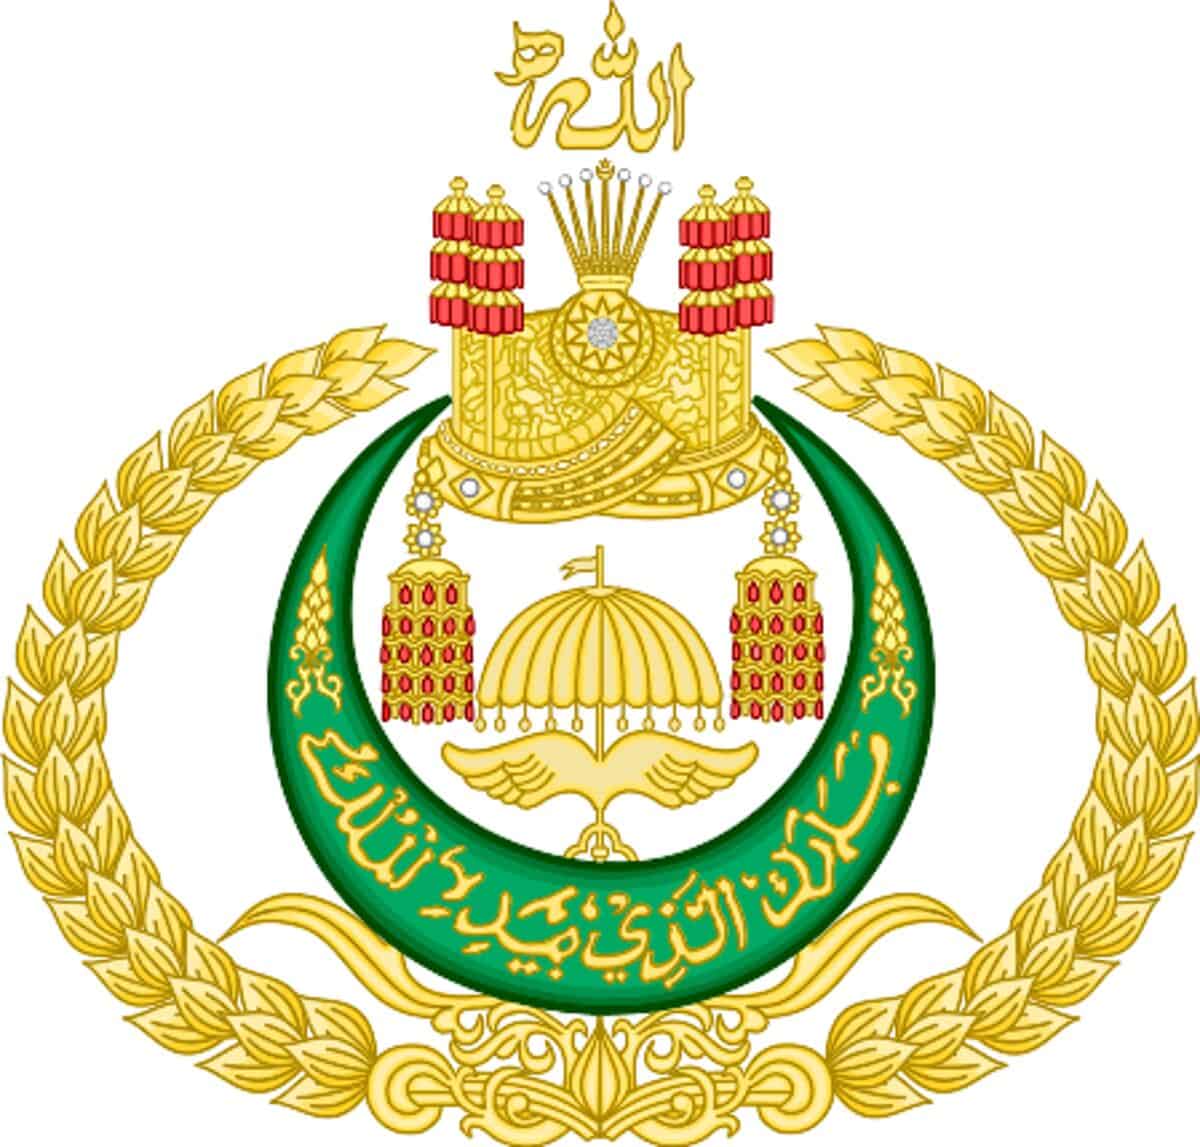 Sultan of Brunei Net Worth Details, Personal Info